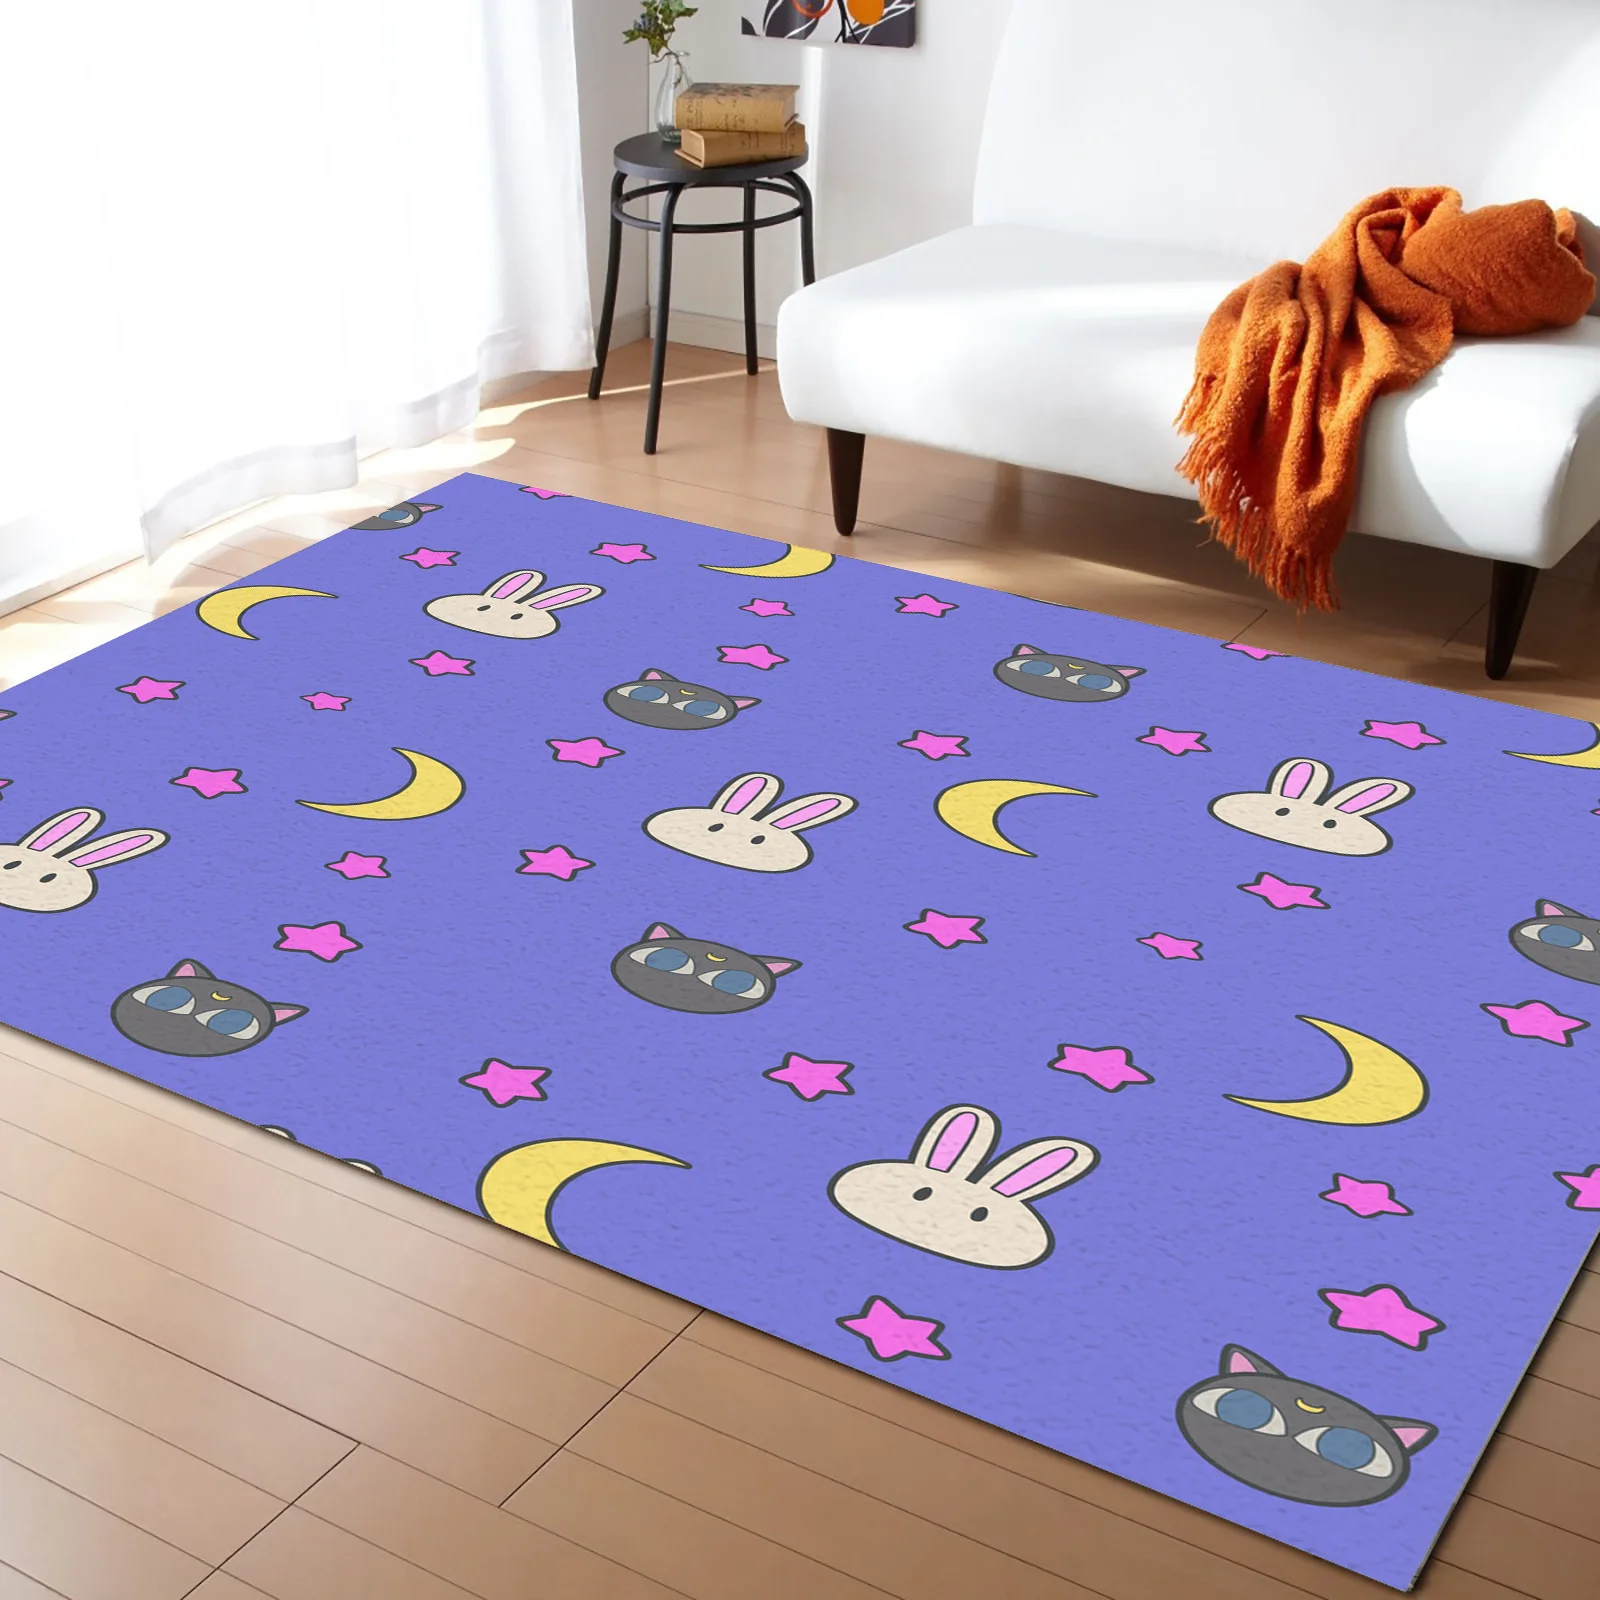 Japan Sailor Moon Floor Area Rug Carpet Living Bed Room Kitchen Non-slip Mat 